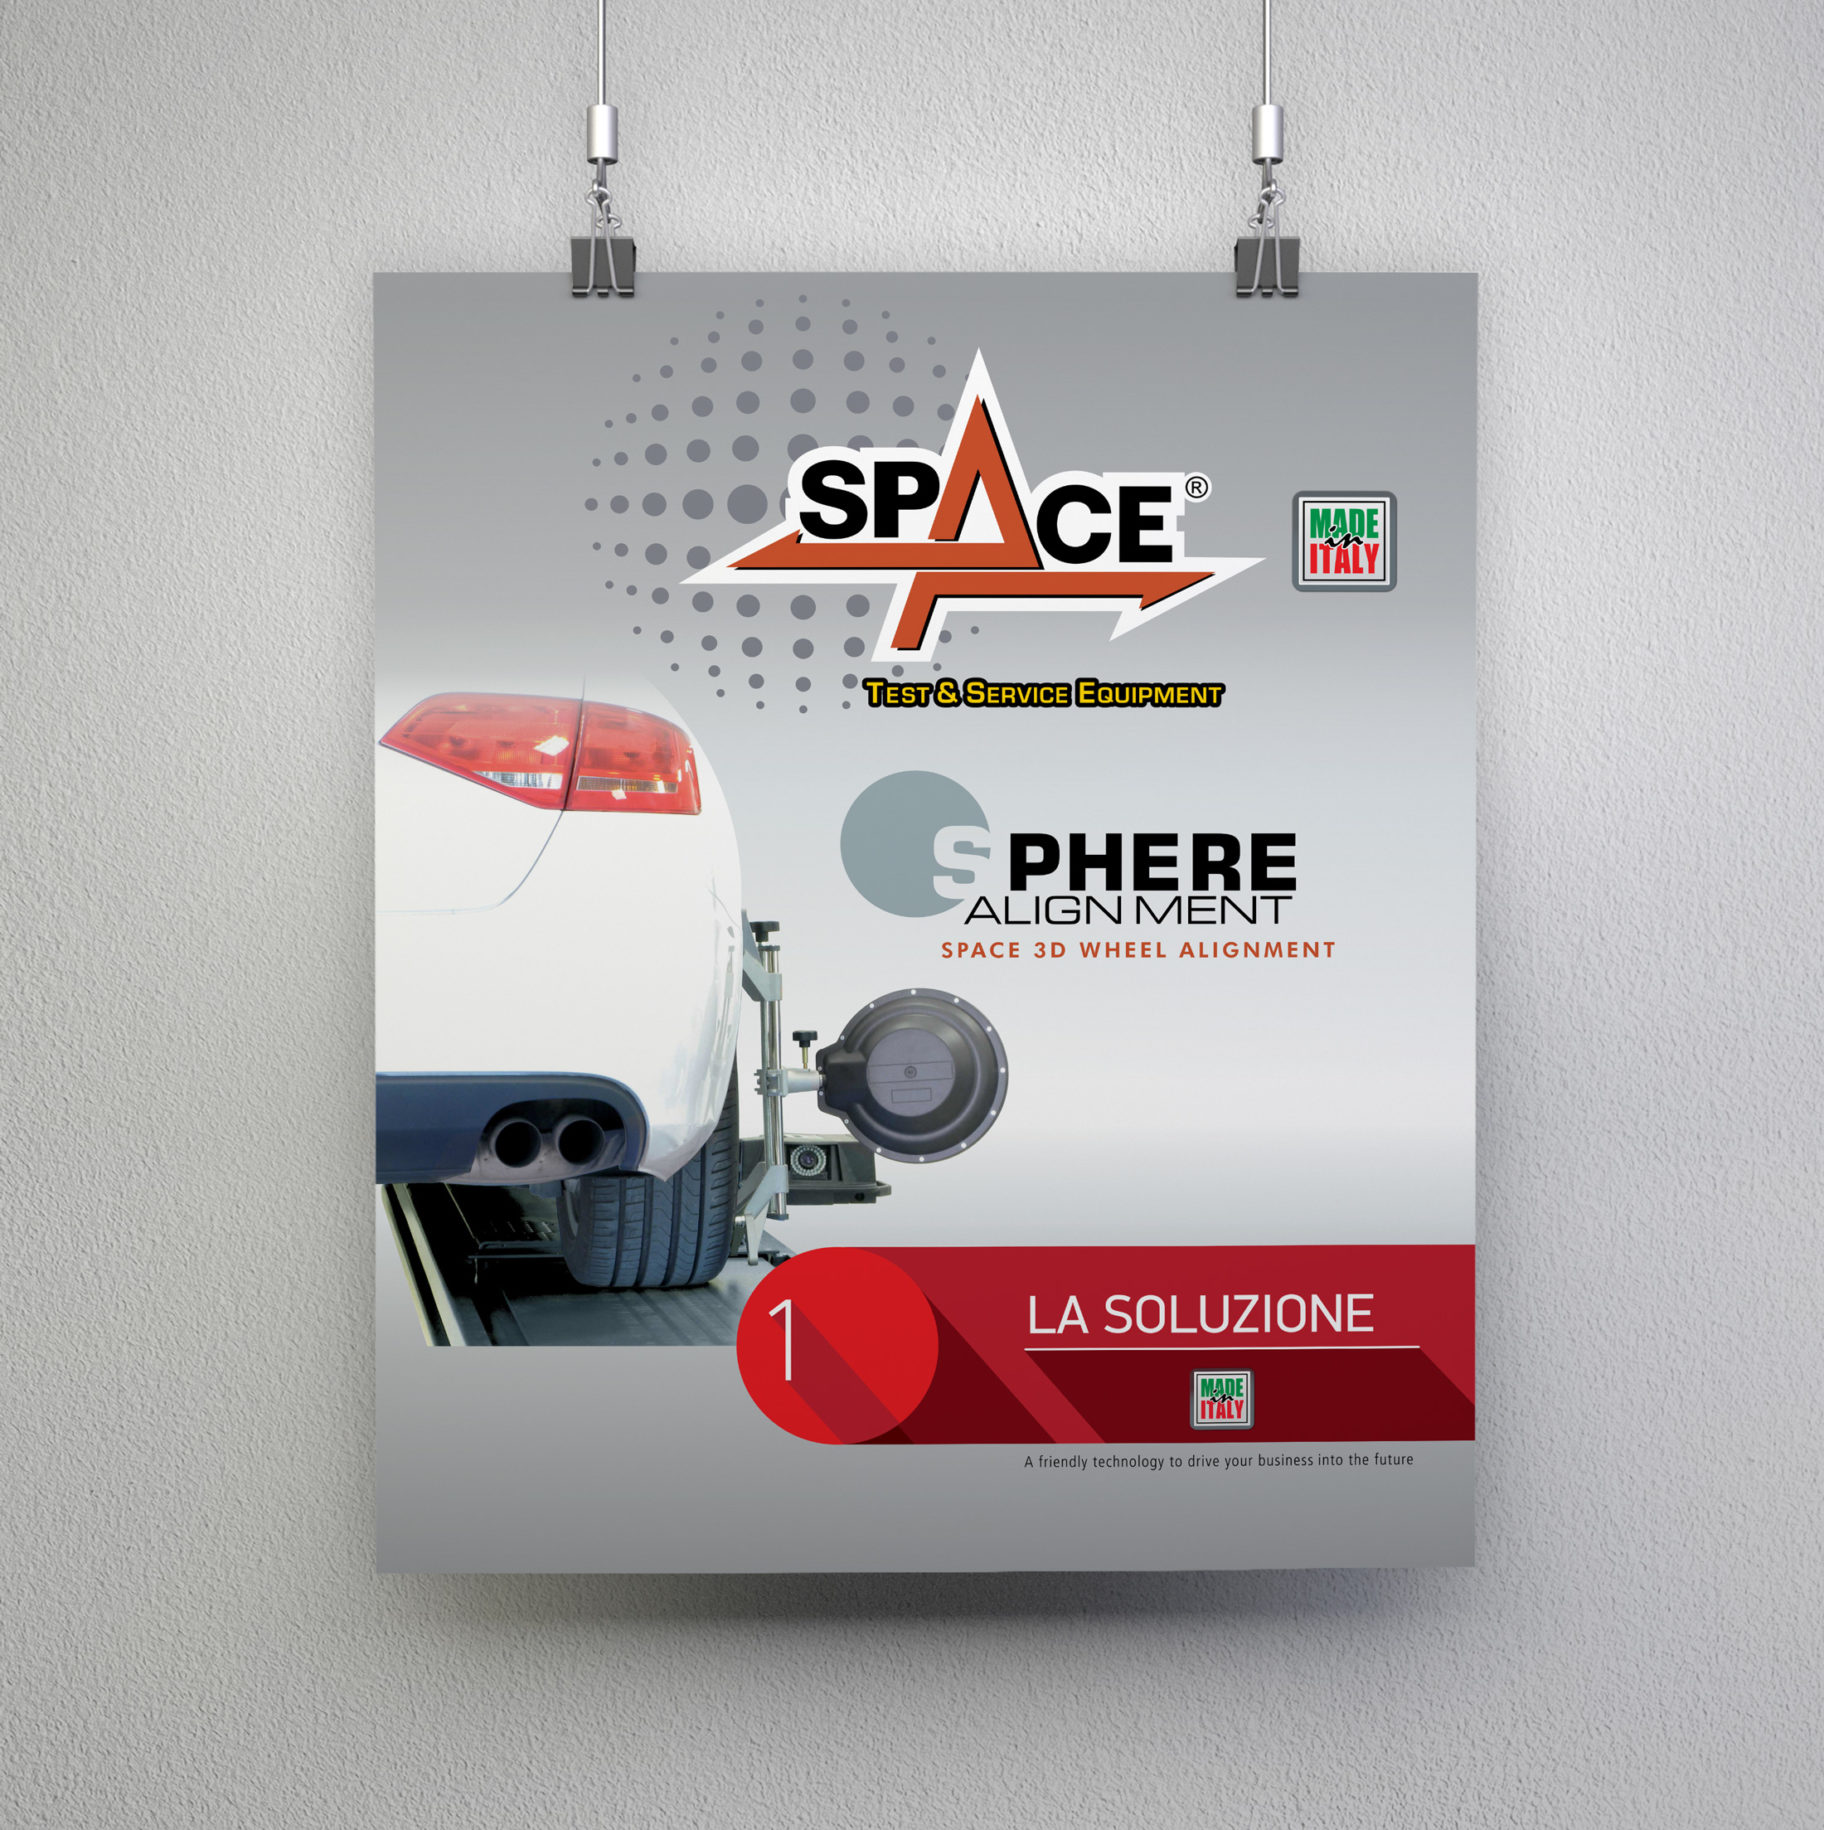 SPHERE-Alignment-logo-poster 03